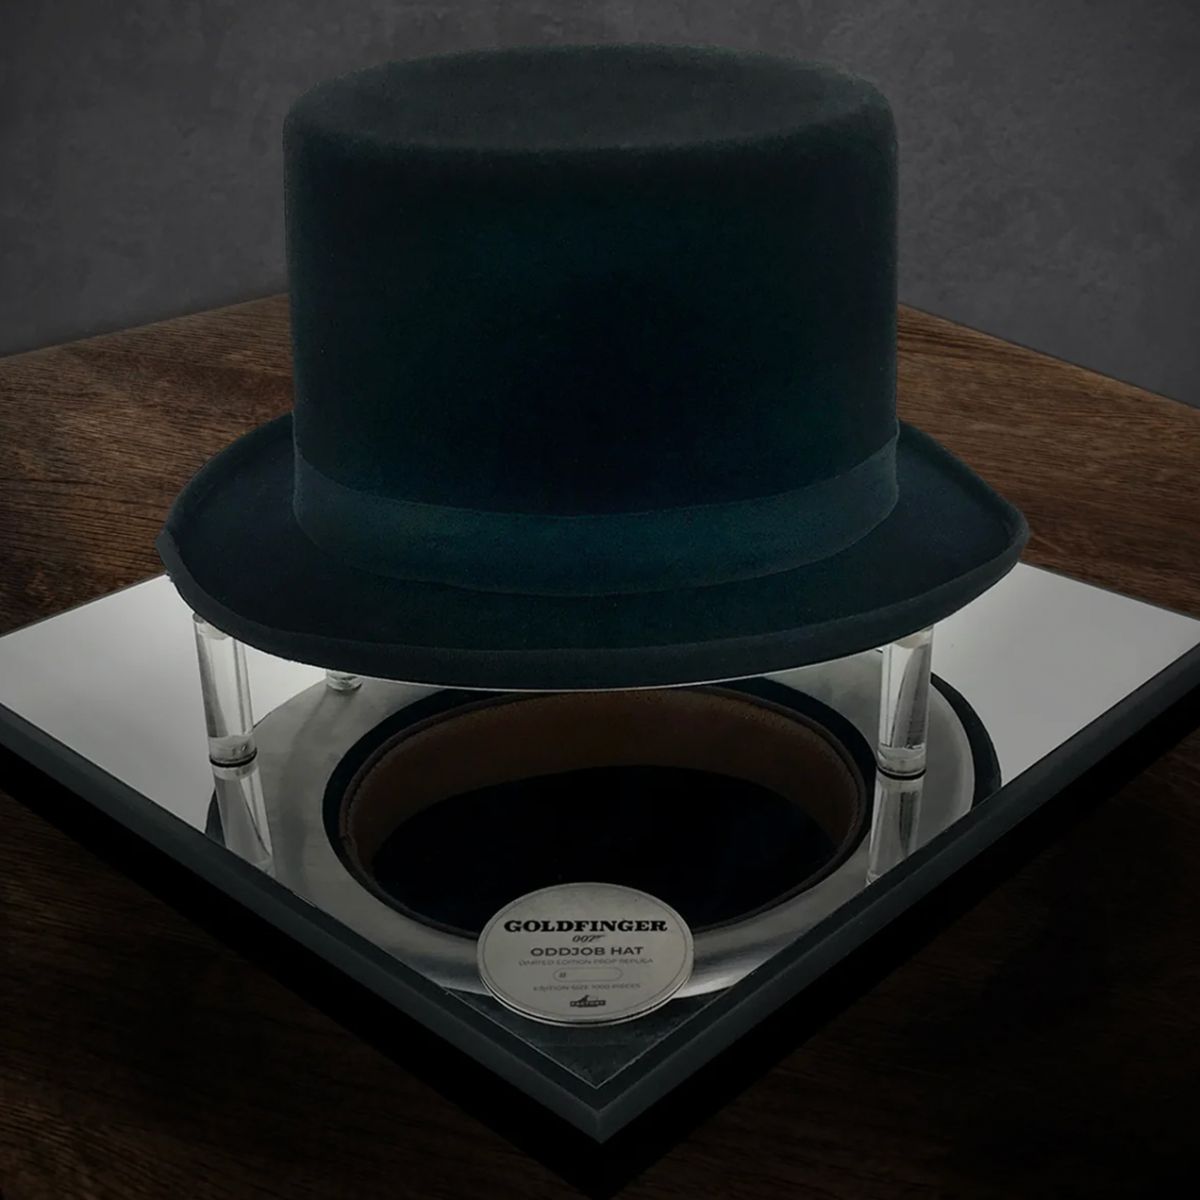 James Bond Oddjob Hat Prop Replica Goldfinger Numbered Edition